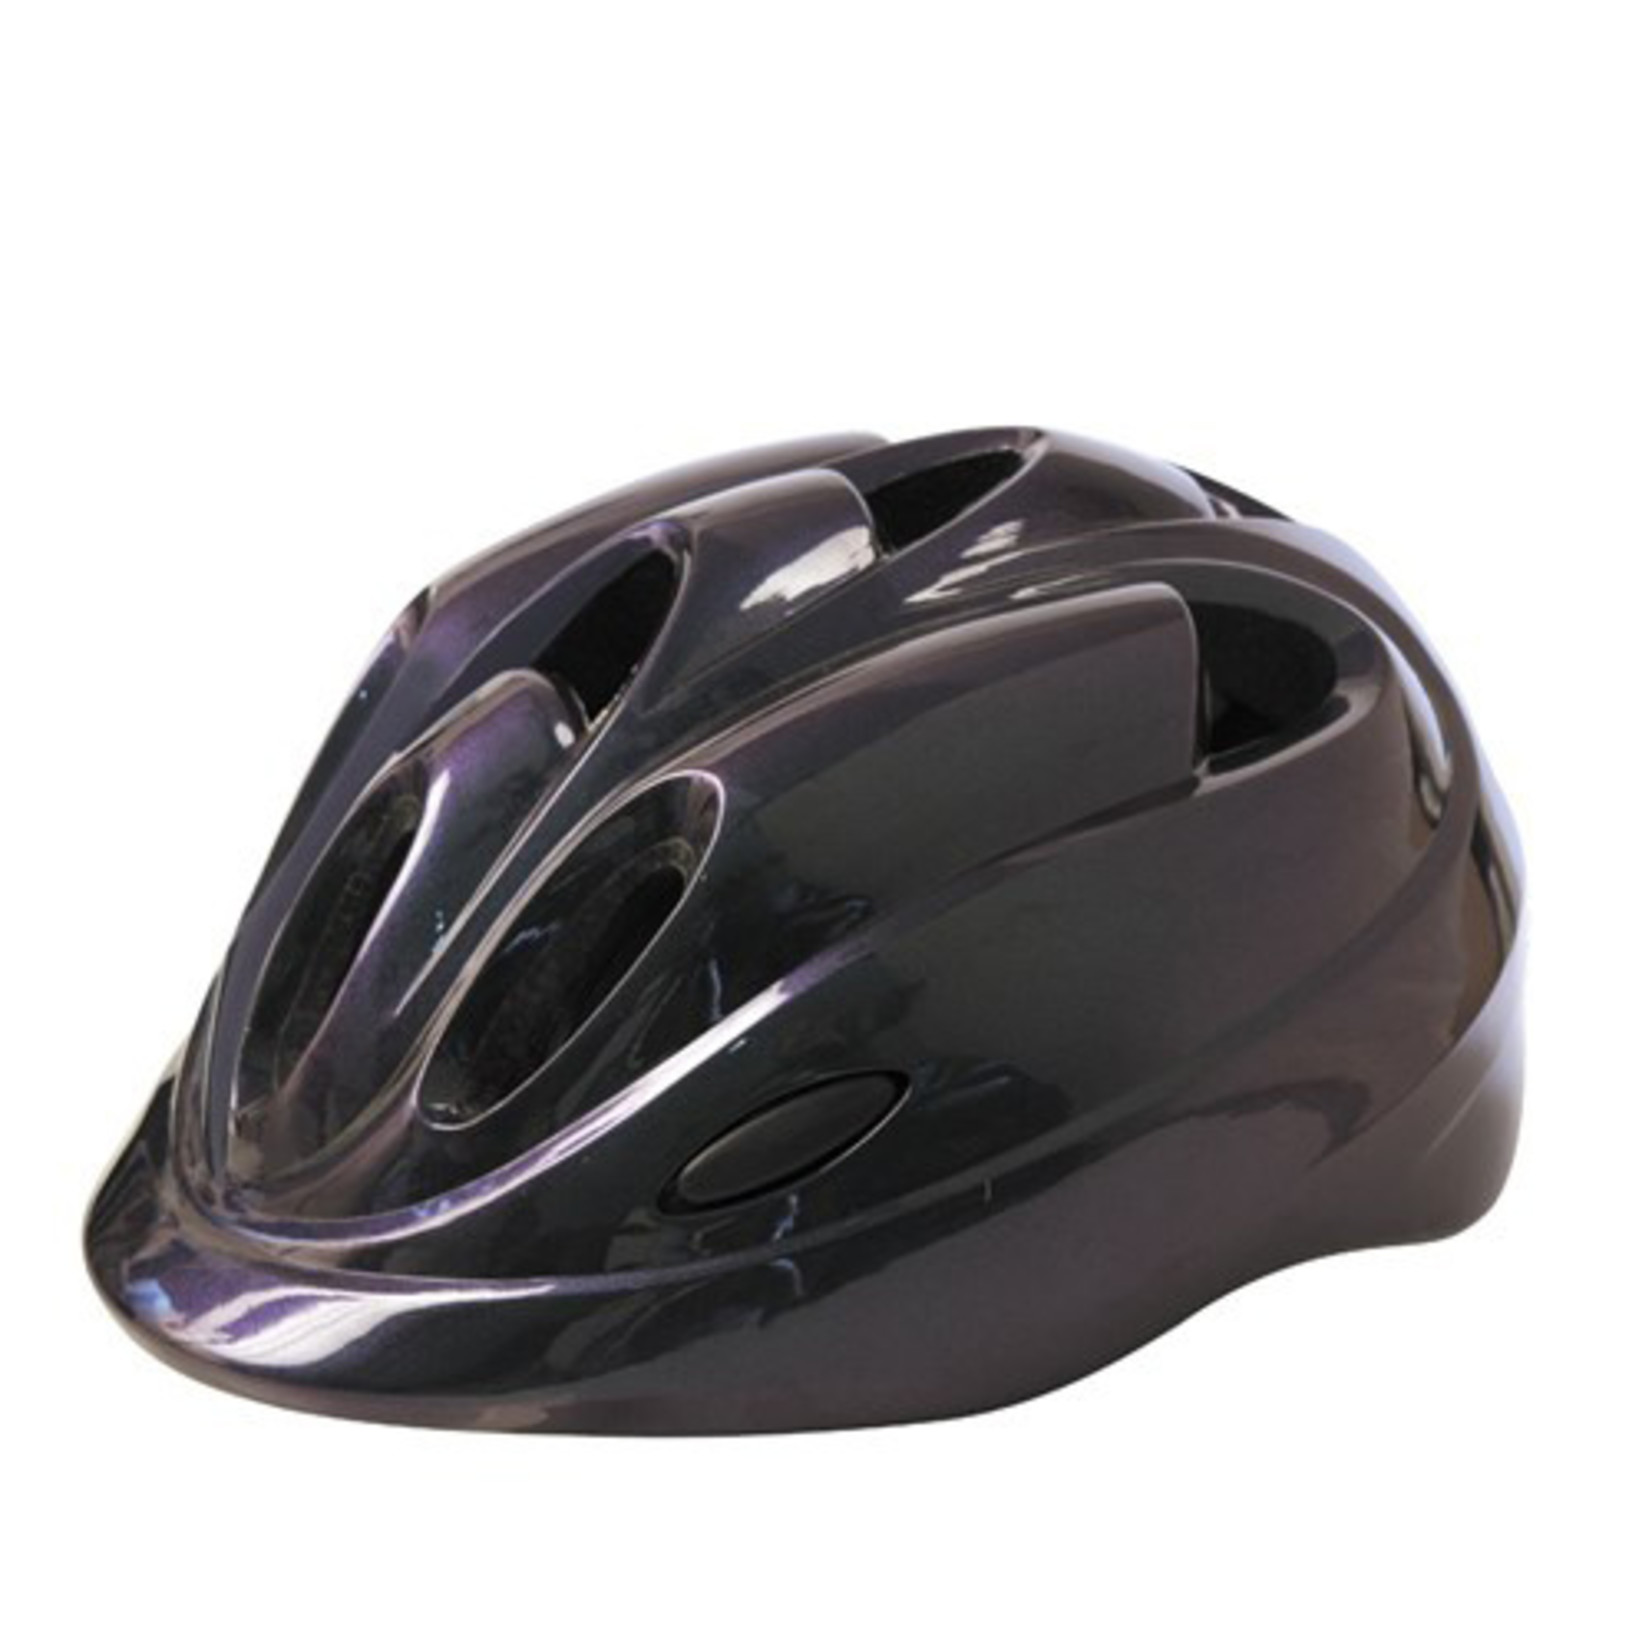 Azur Azur Bike Helmet - J36 Series - Holographic - 50-54cm Small - AHJ36H